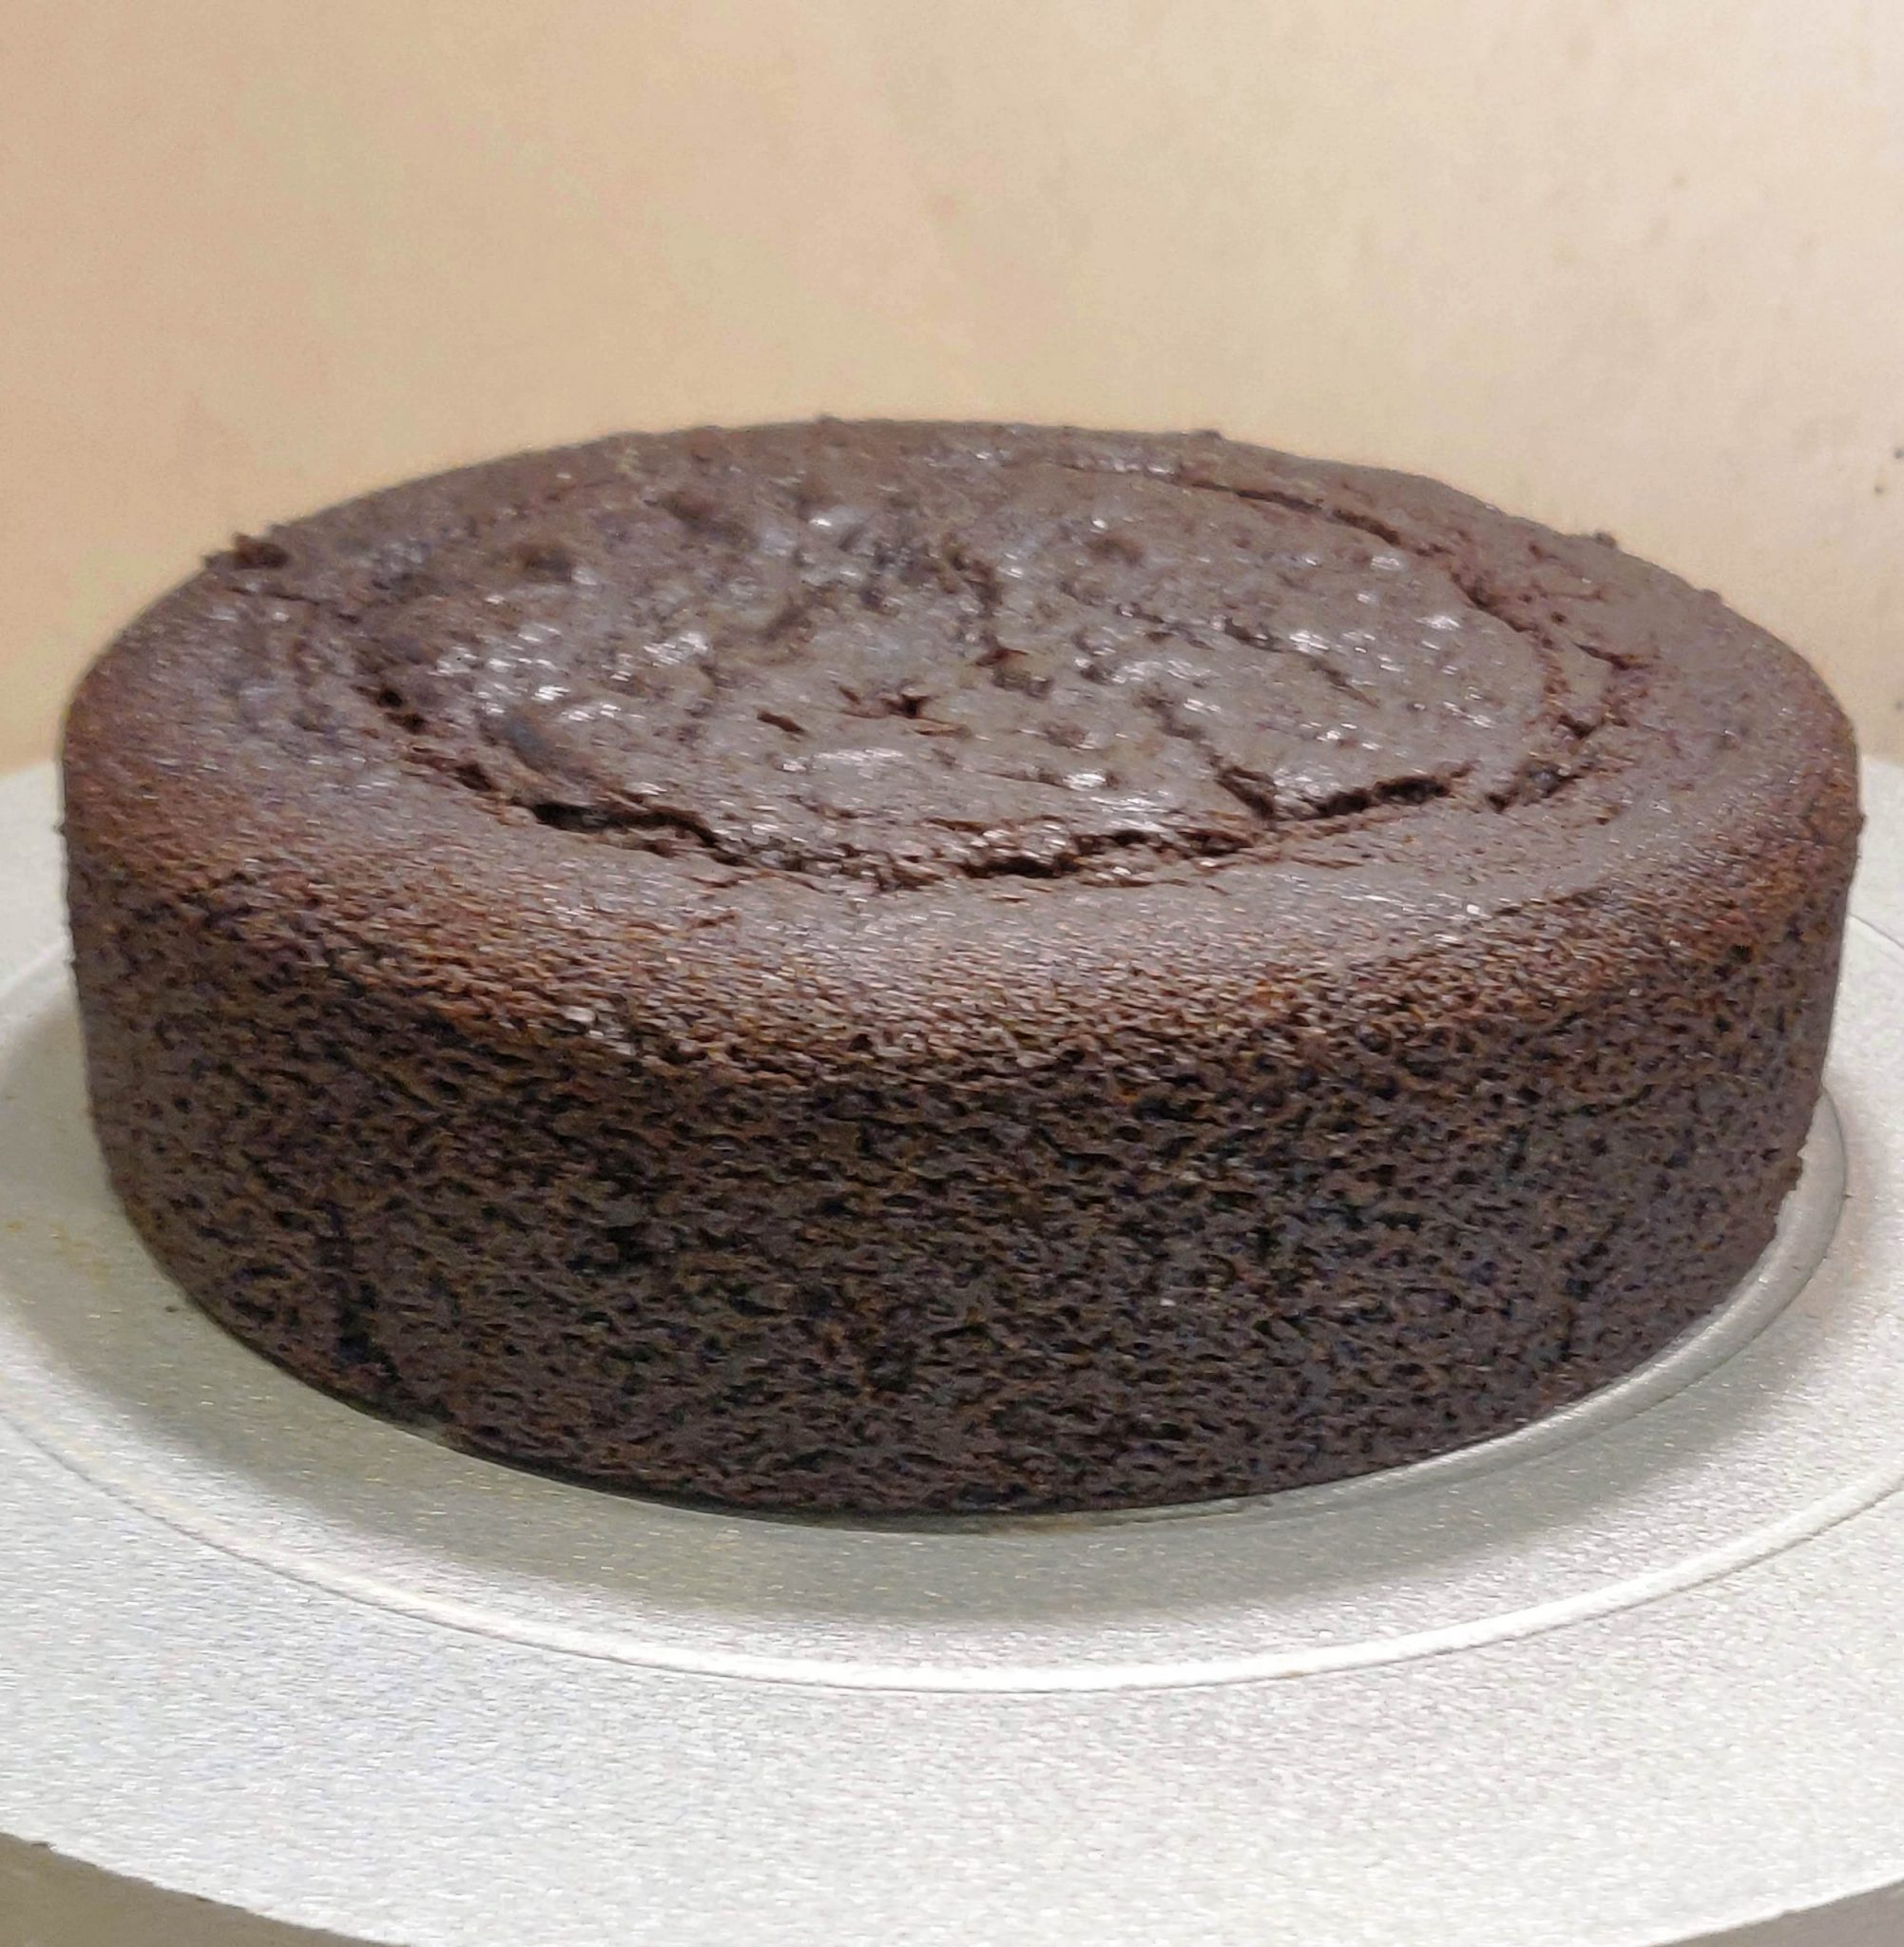 easy Chocolate Mud Cake